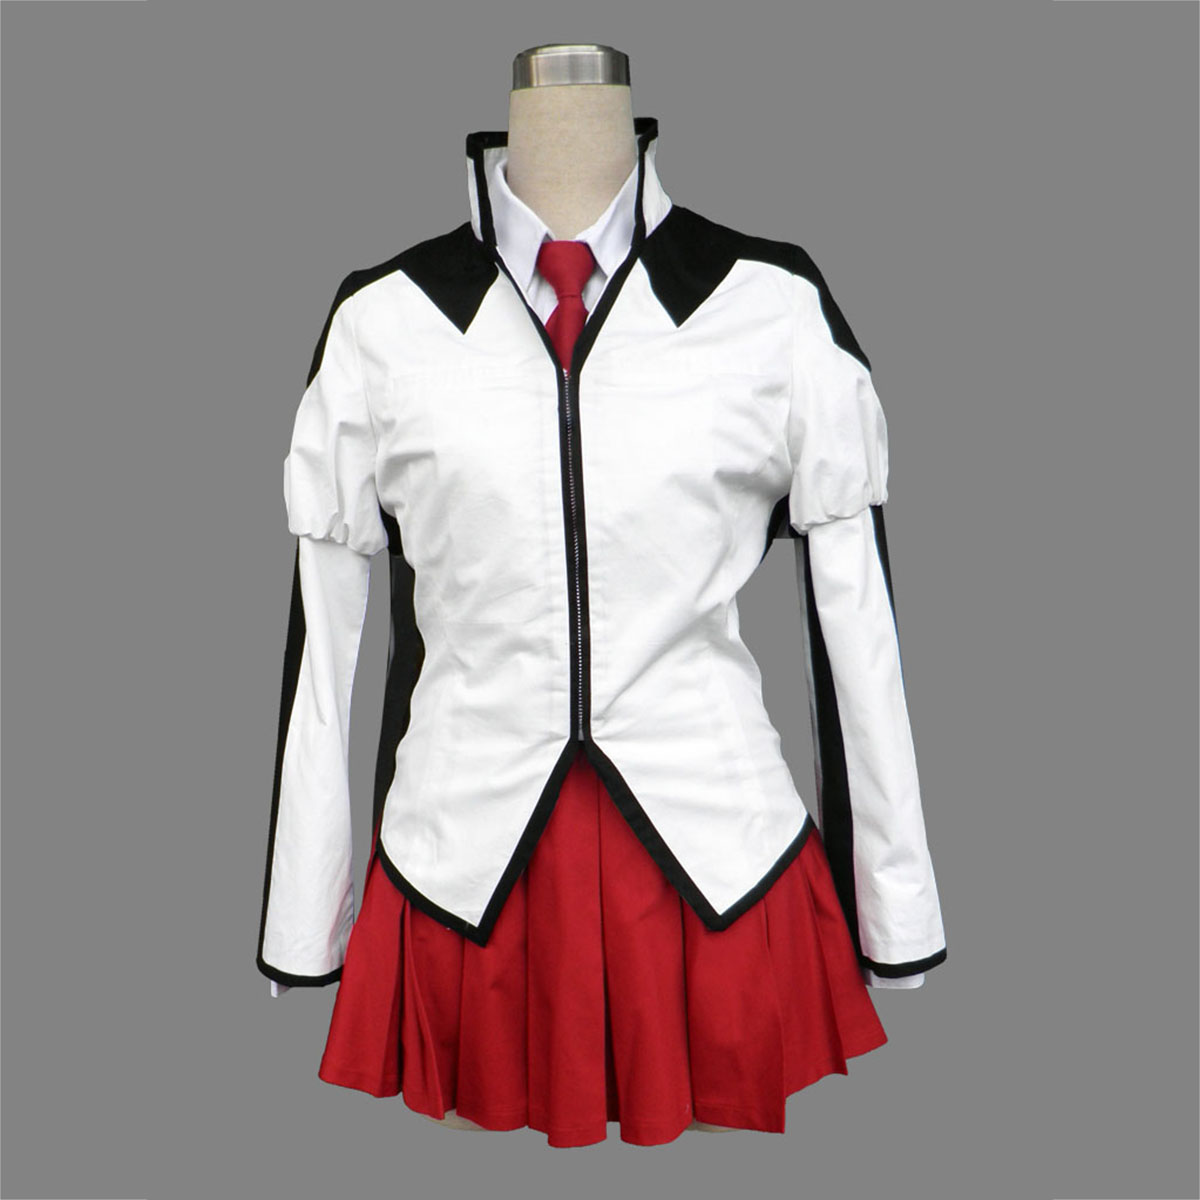 The Gentlemen Alliance Cross Female School Uniform 2 Cosplay Costumes AU